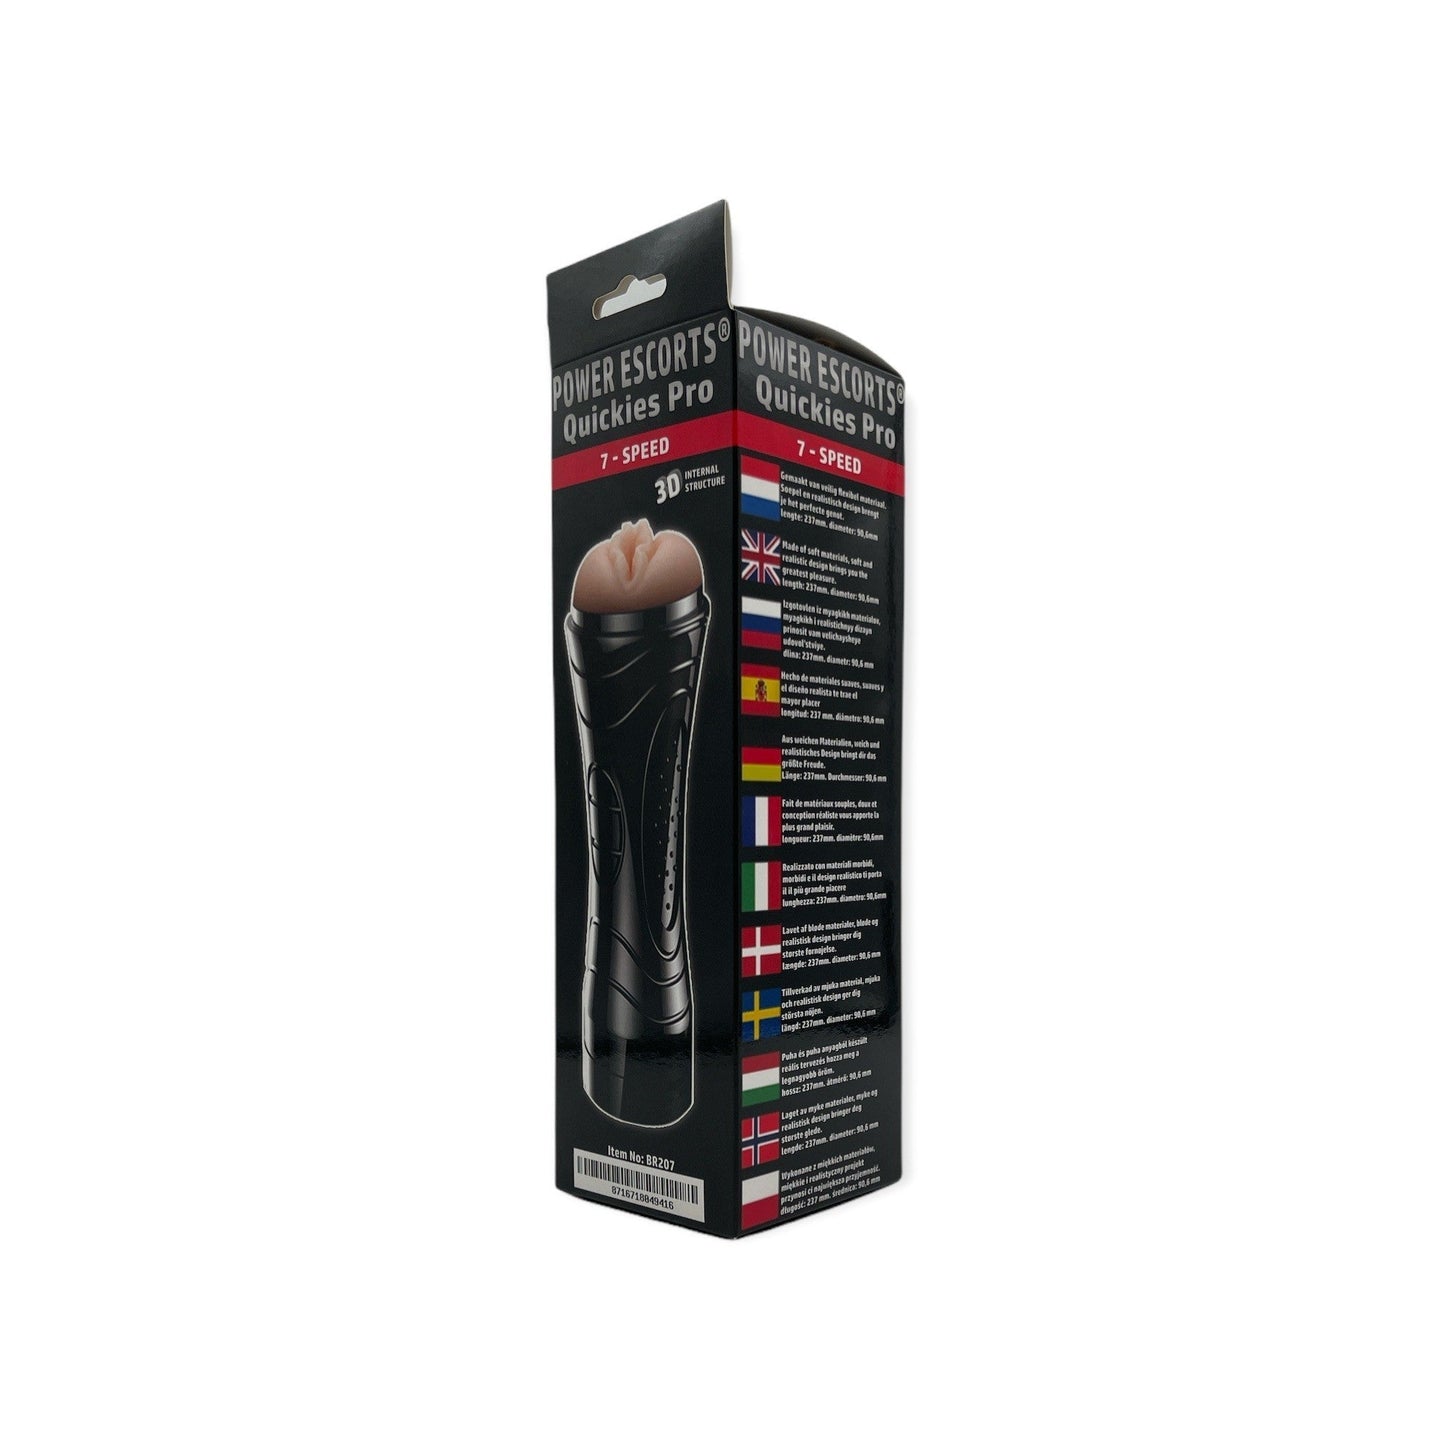 Power Escorts - BR207 new - Quickies Pro Masturbator - Including 3 Pack Beaded Cockring - Big Size Masturbator - 7-Speed Vibrating - 24 CM - Black/Flesh- Brandnew packaging